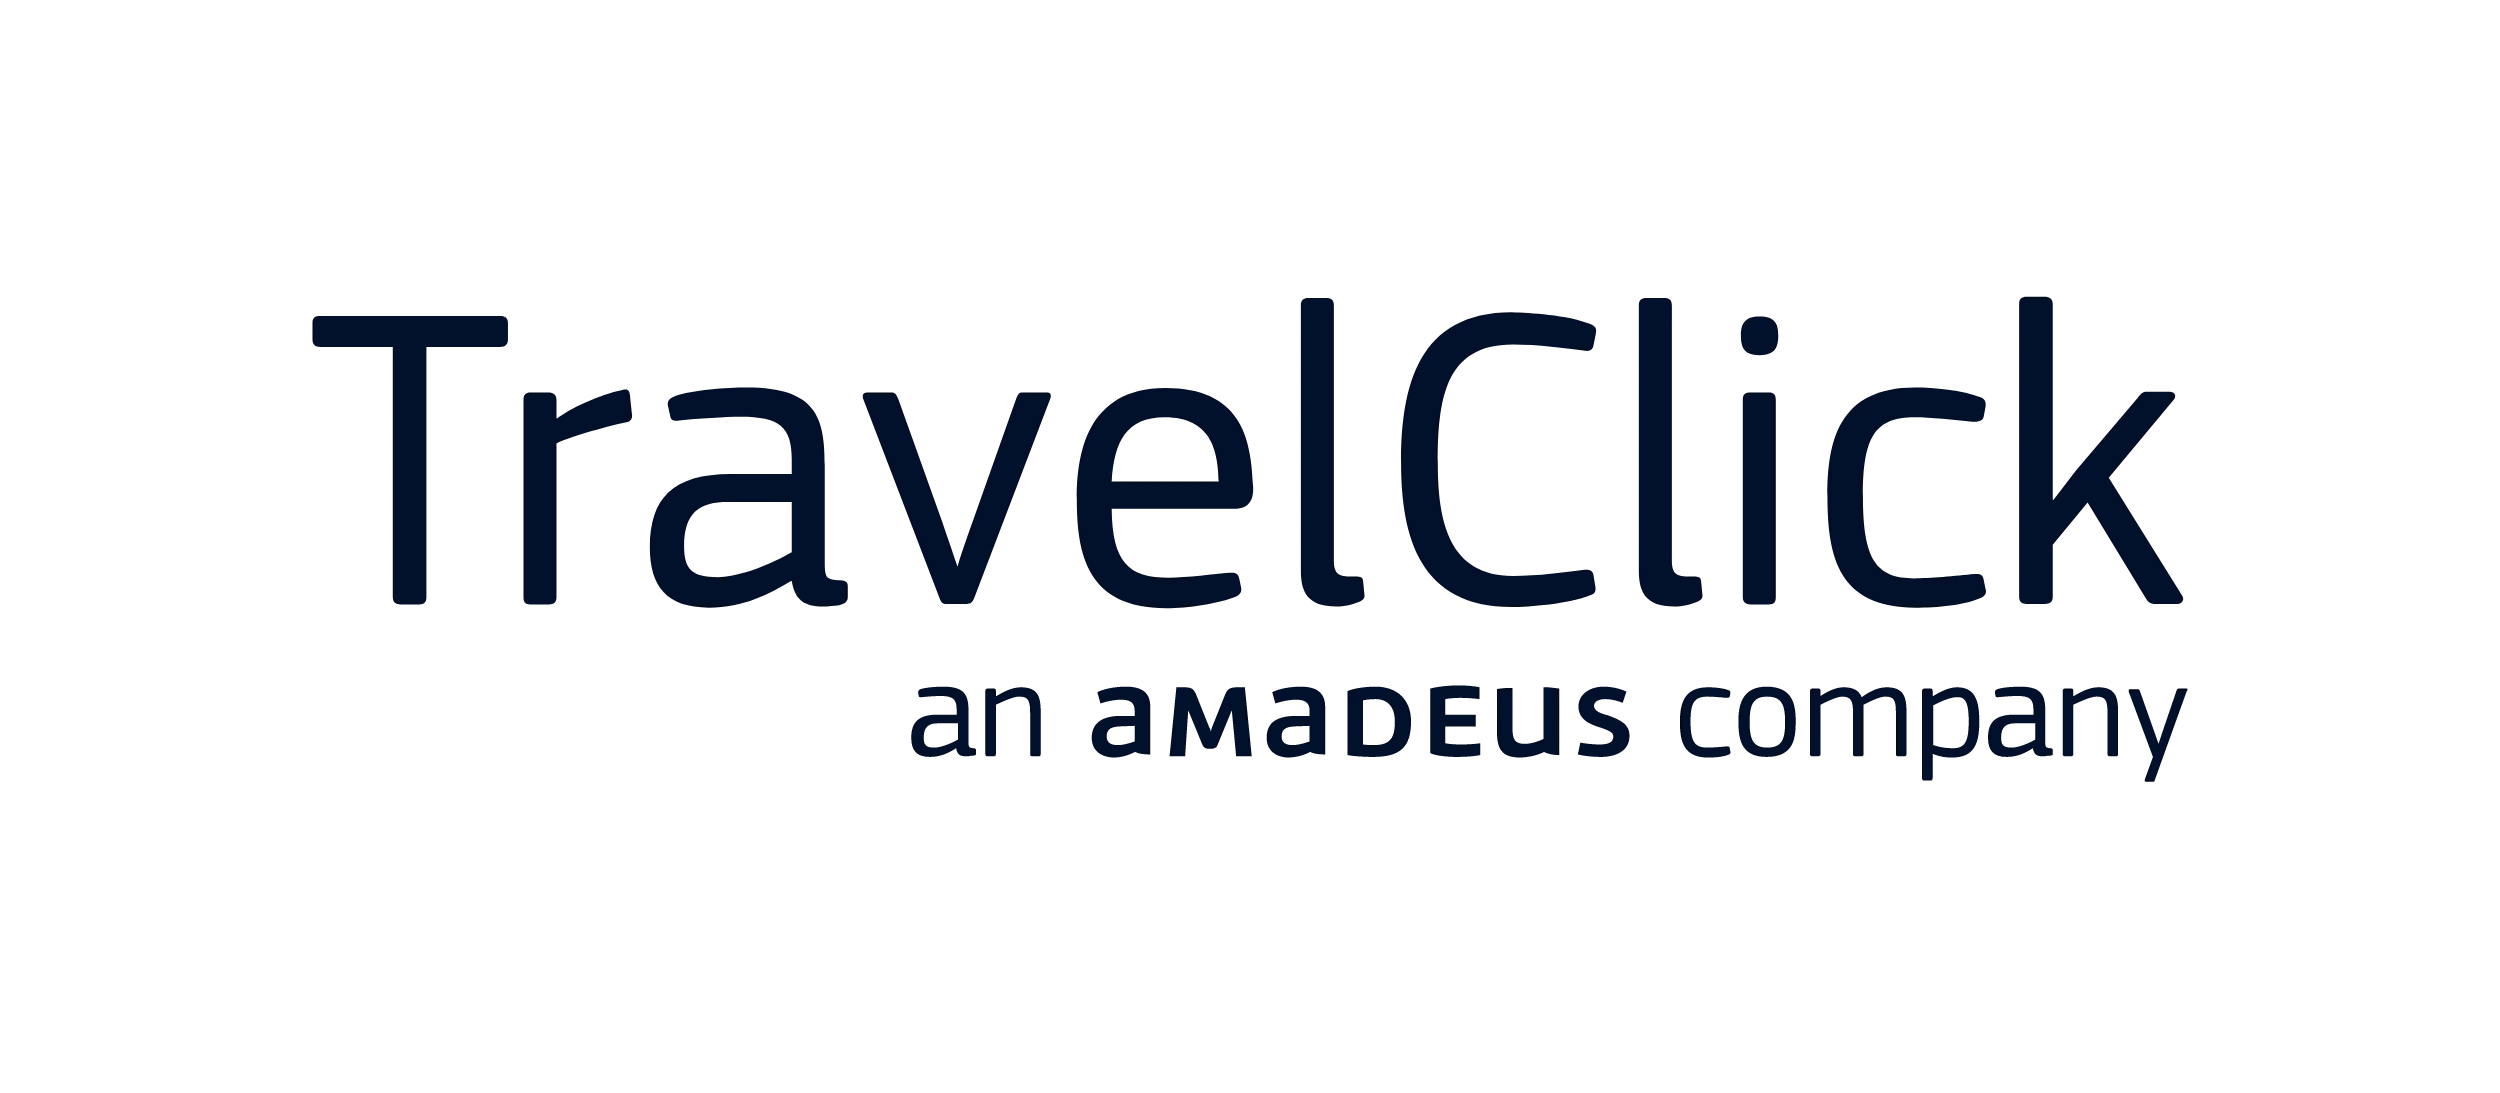 Travel click - logo